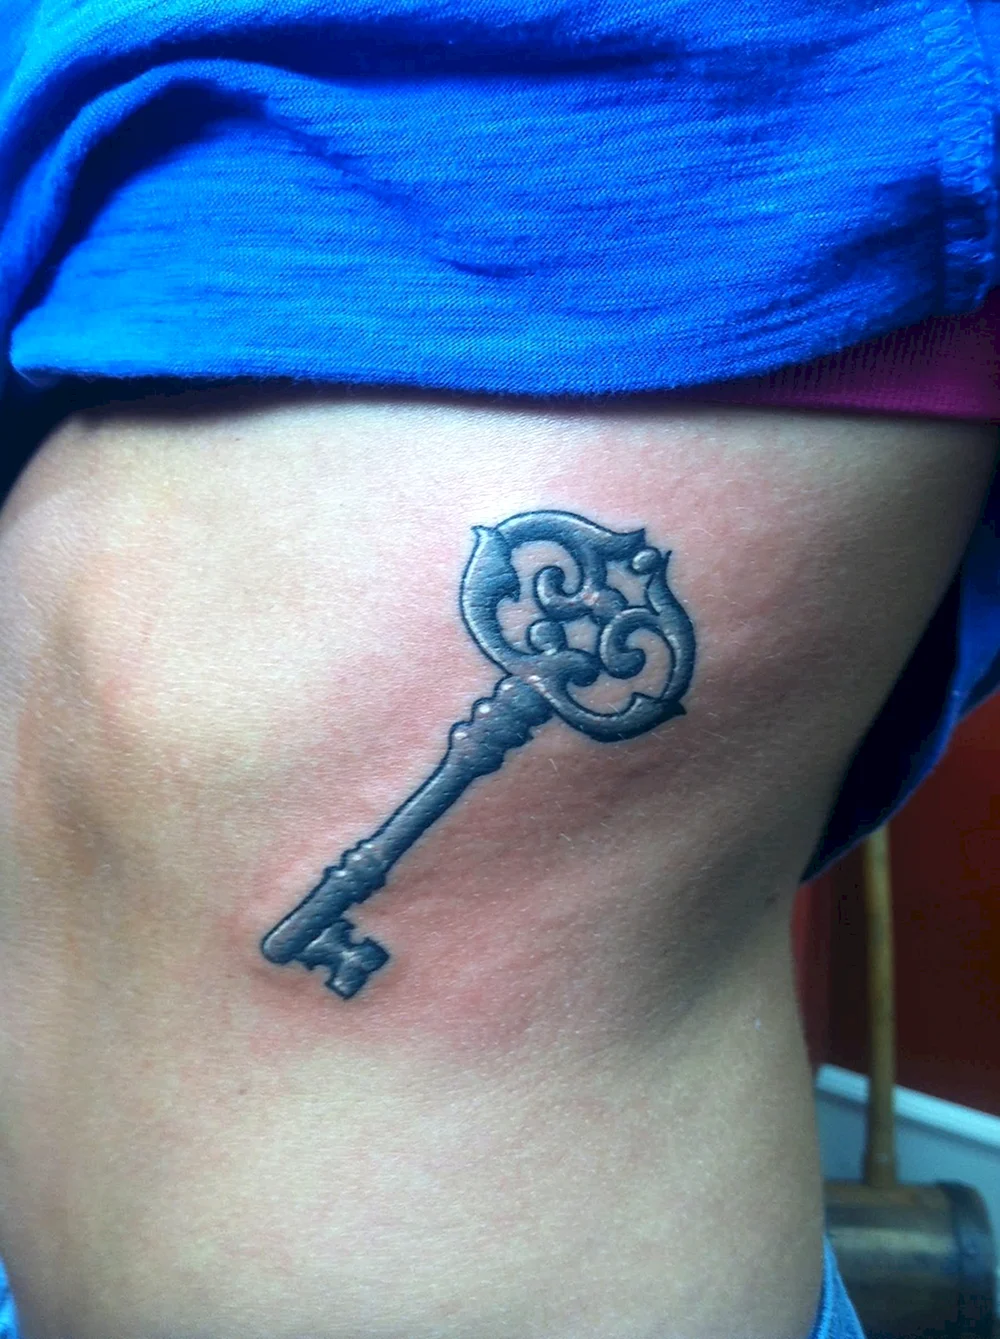 Skeleton Key Tattoo